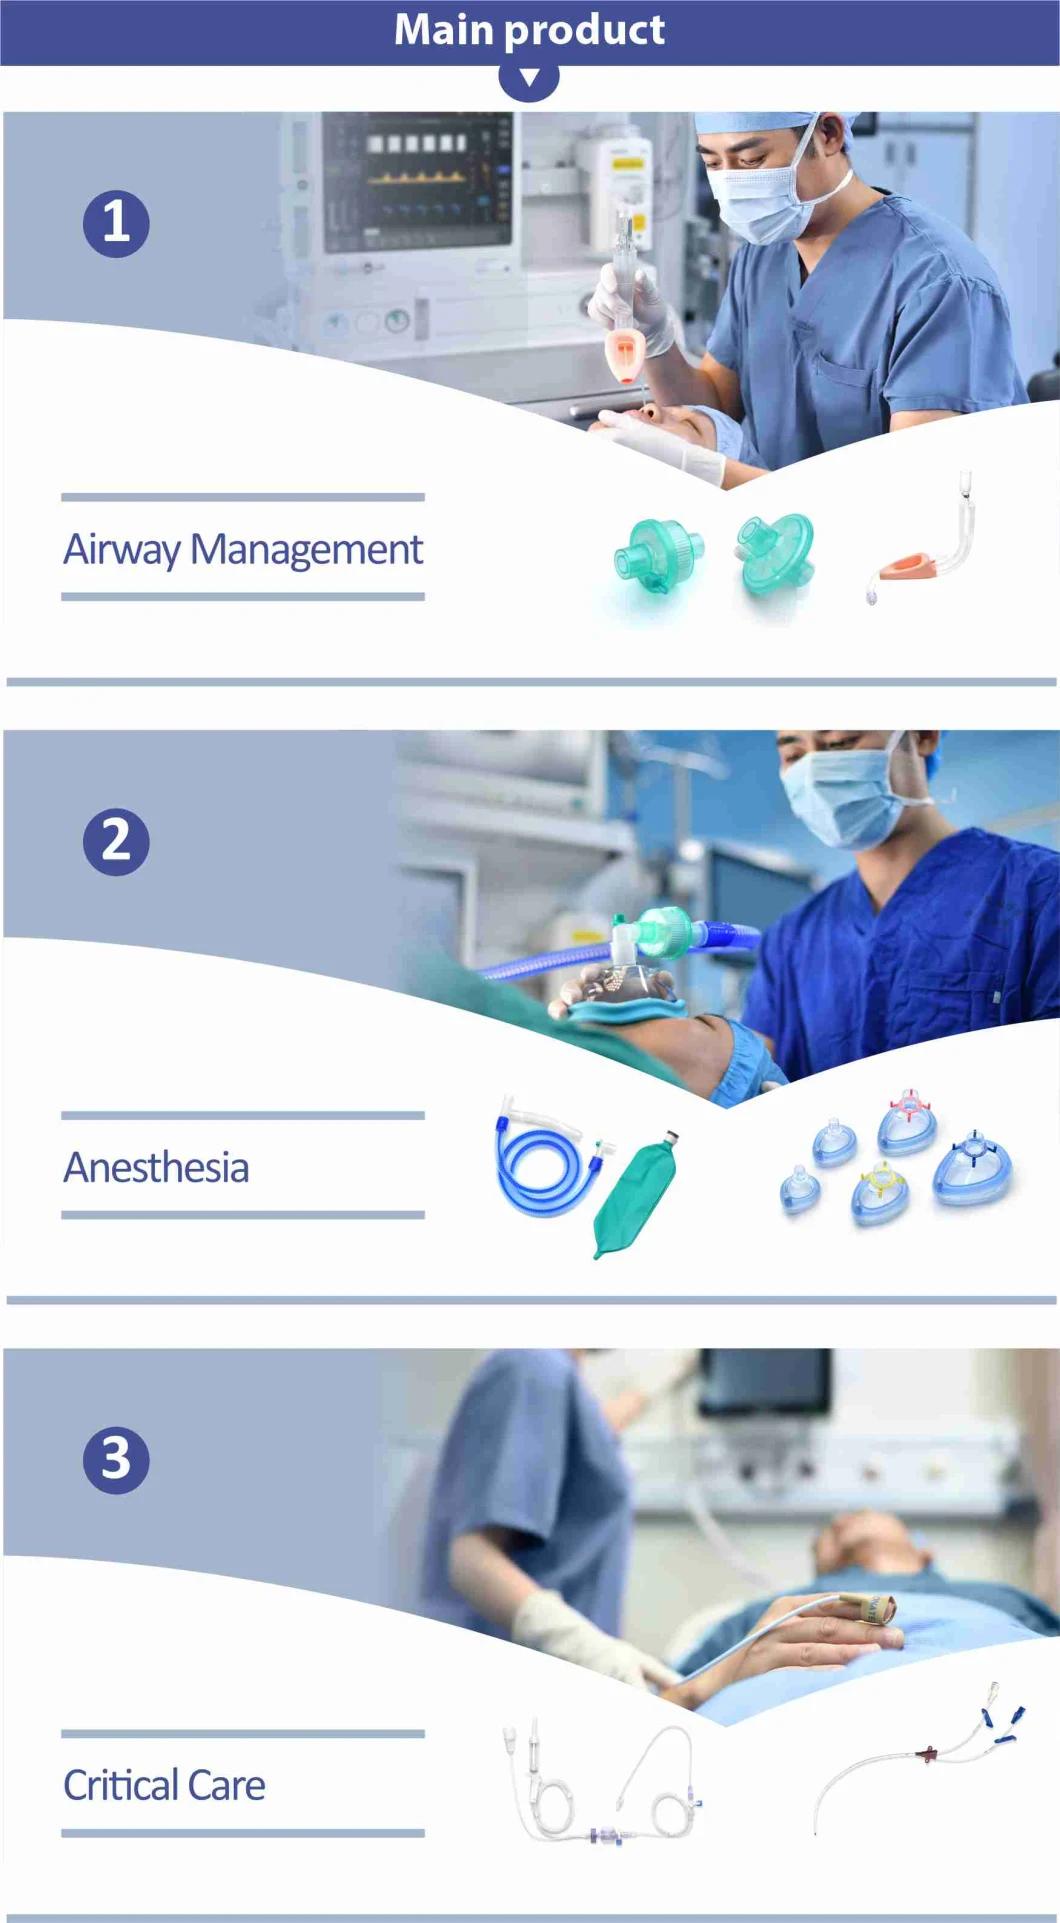 Hospital Instrument Disposable Laryngeal Mask Airway (Proseal)